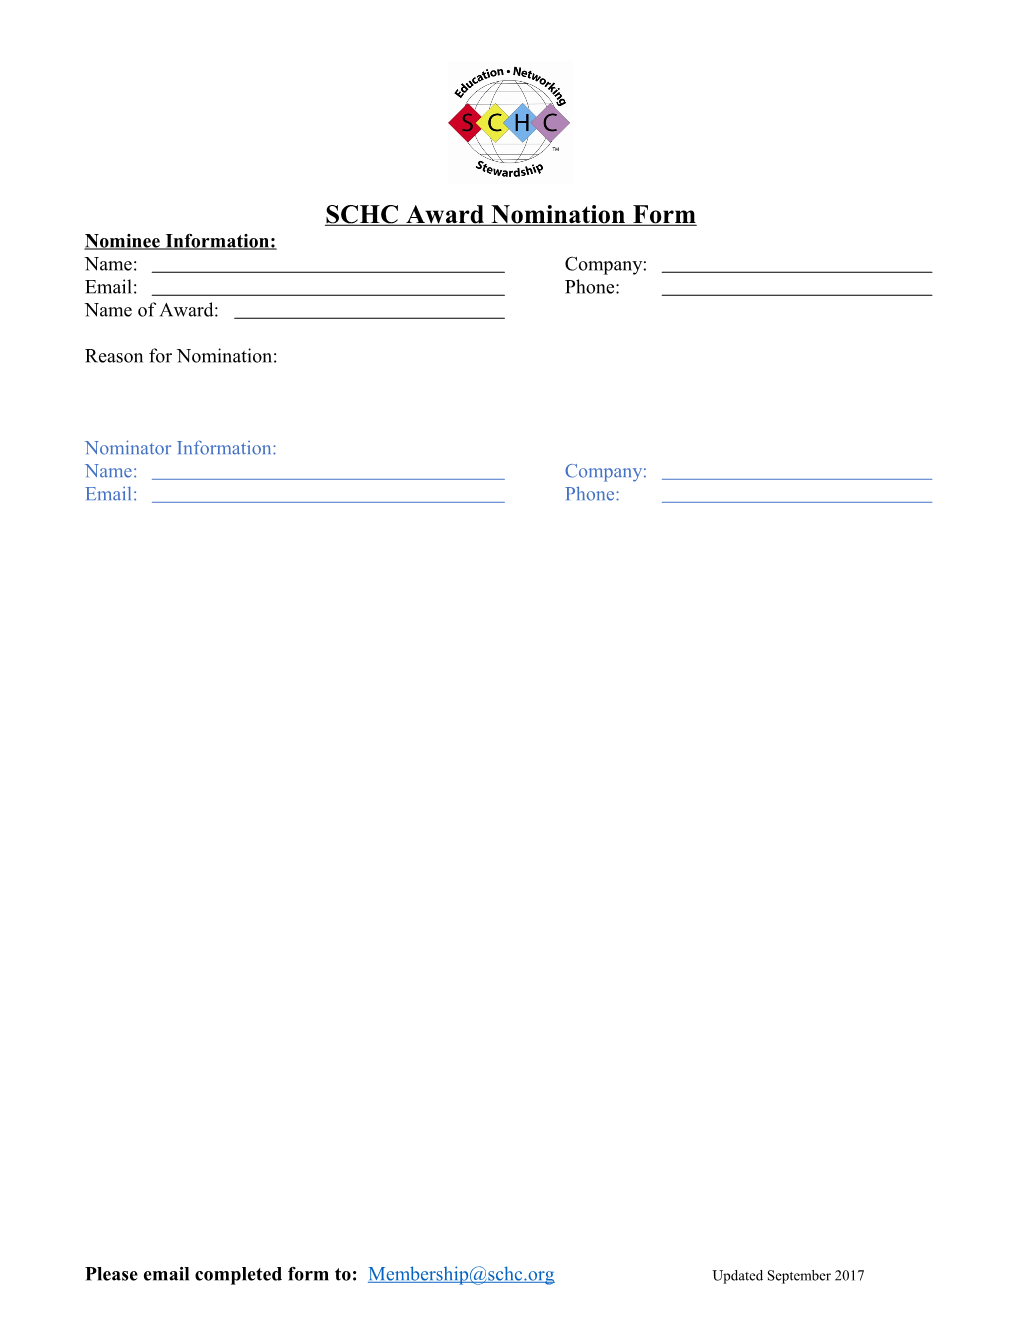 SCHC Award Nomination Form